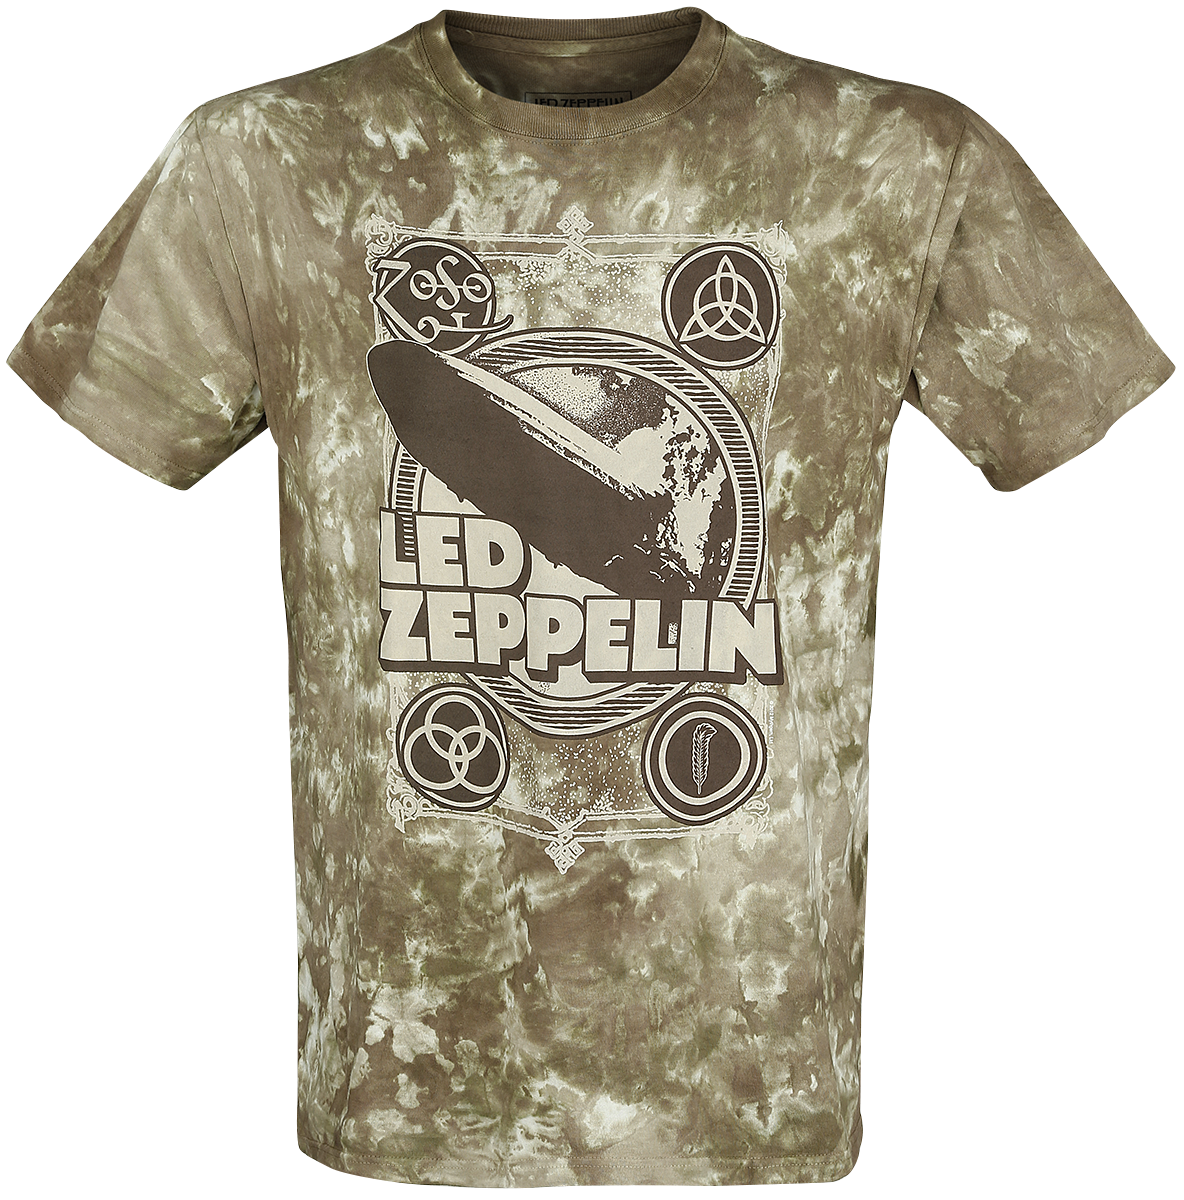 Led Zeppelin - Shook Me - T-Shirt - multicolour image